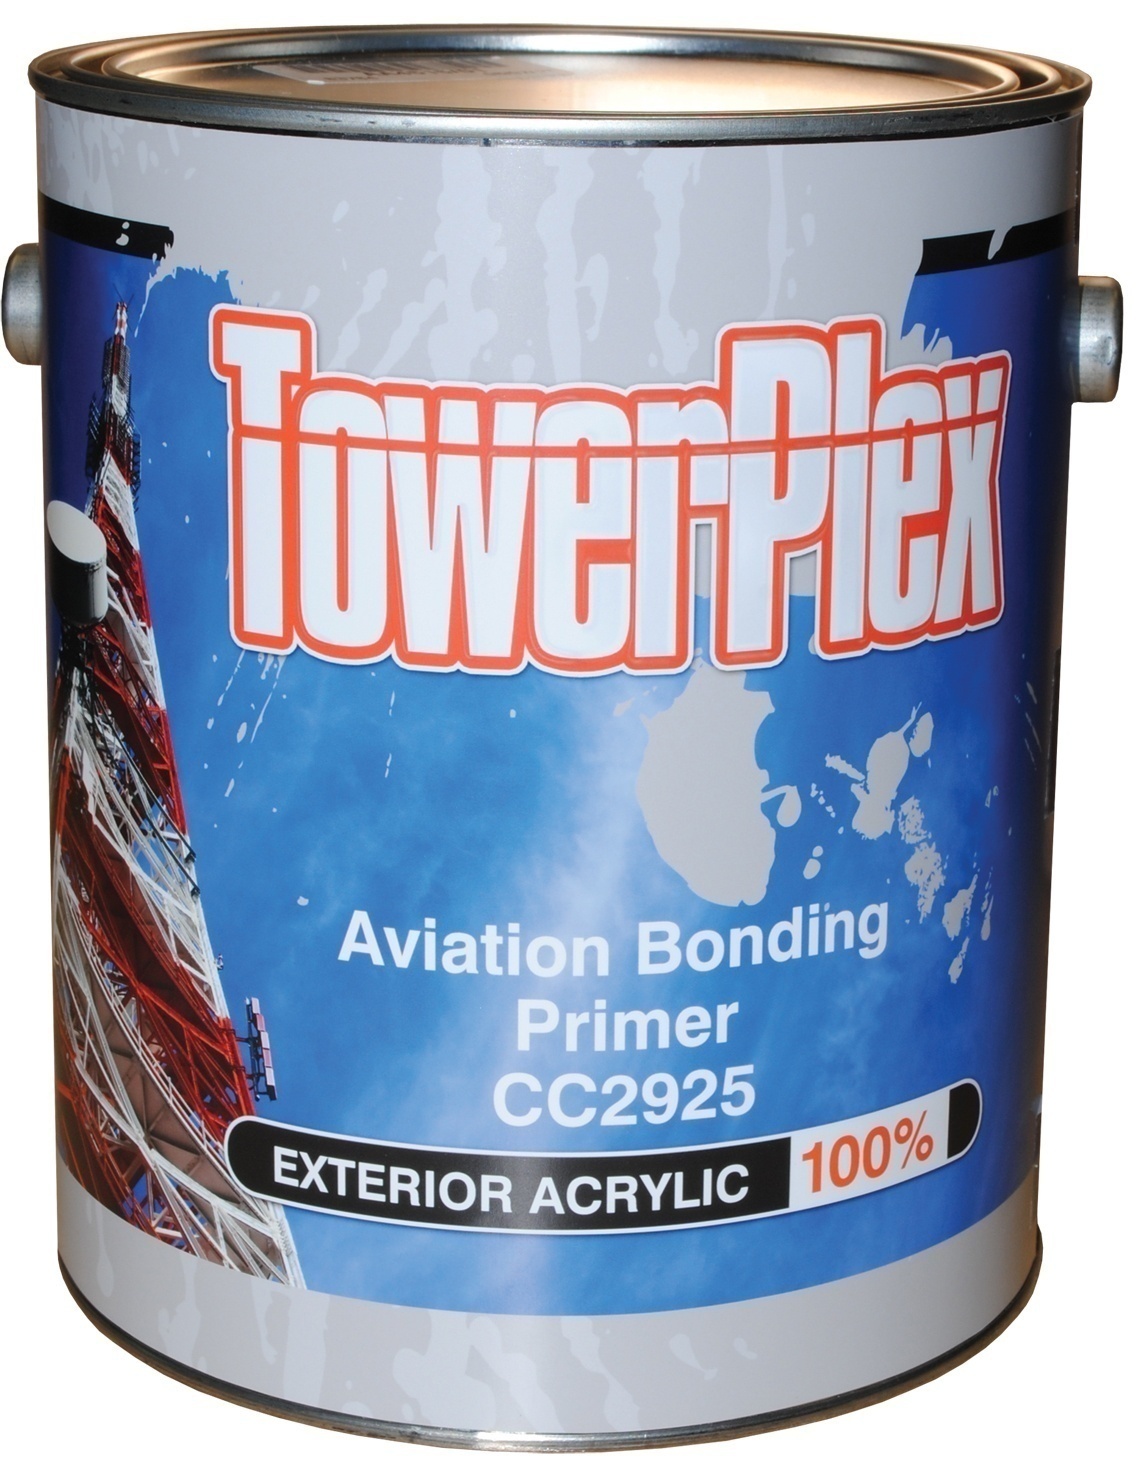 CC2925 TowerPlex Acrylic Bonding Primer (1 Gallon Pail) from Columbia Safety